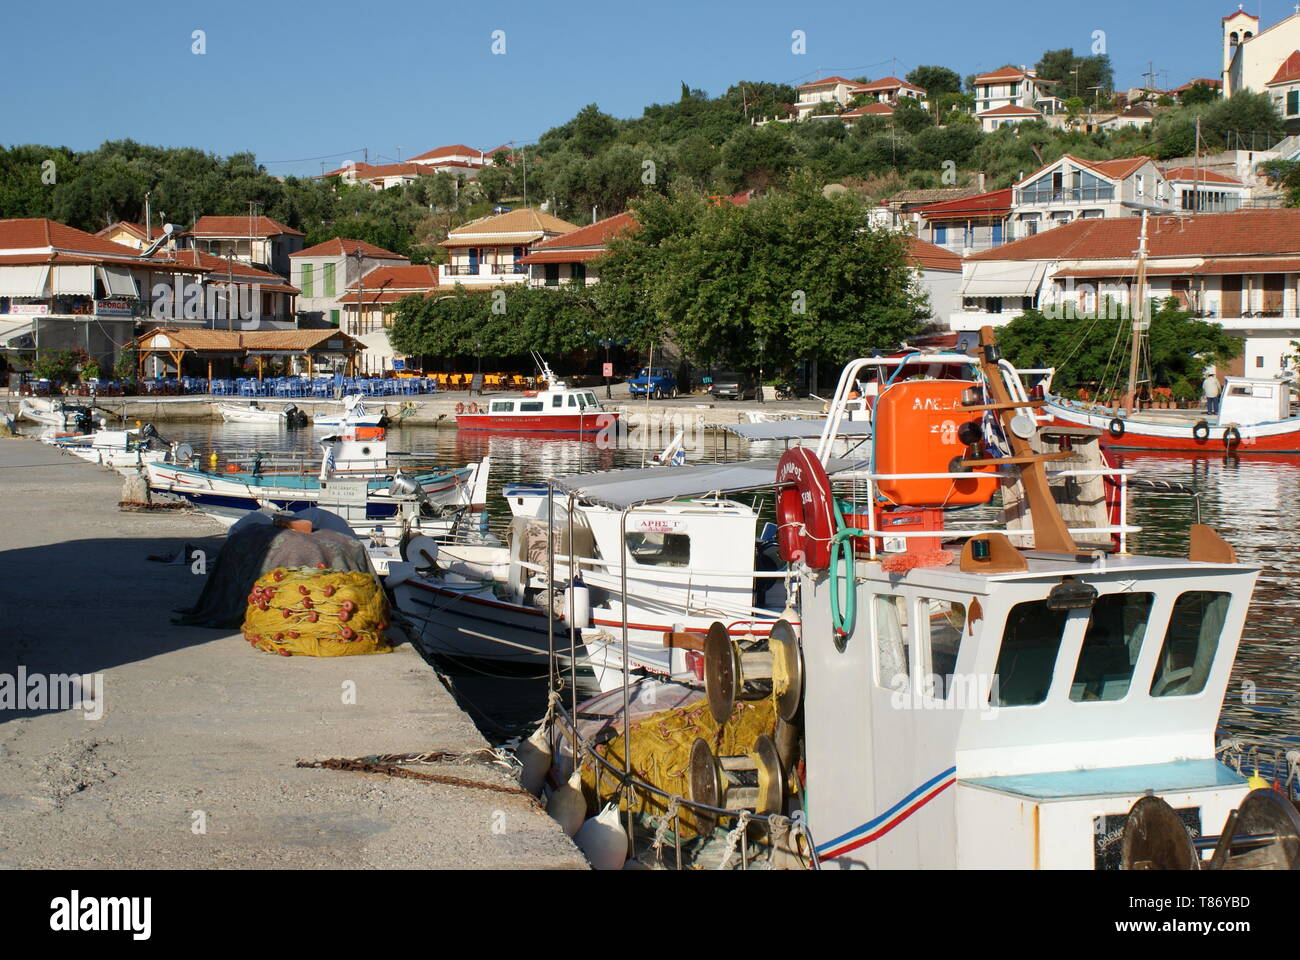 Kalamos harbour, Kalamos, Lefkada municipality, Greece Stock Photo